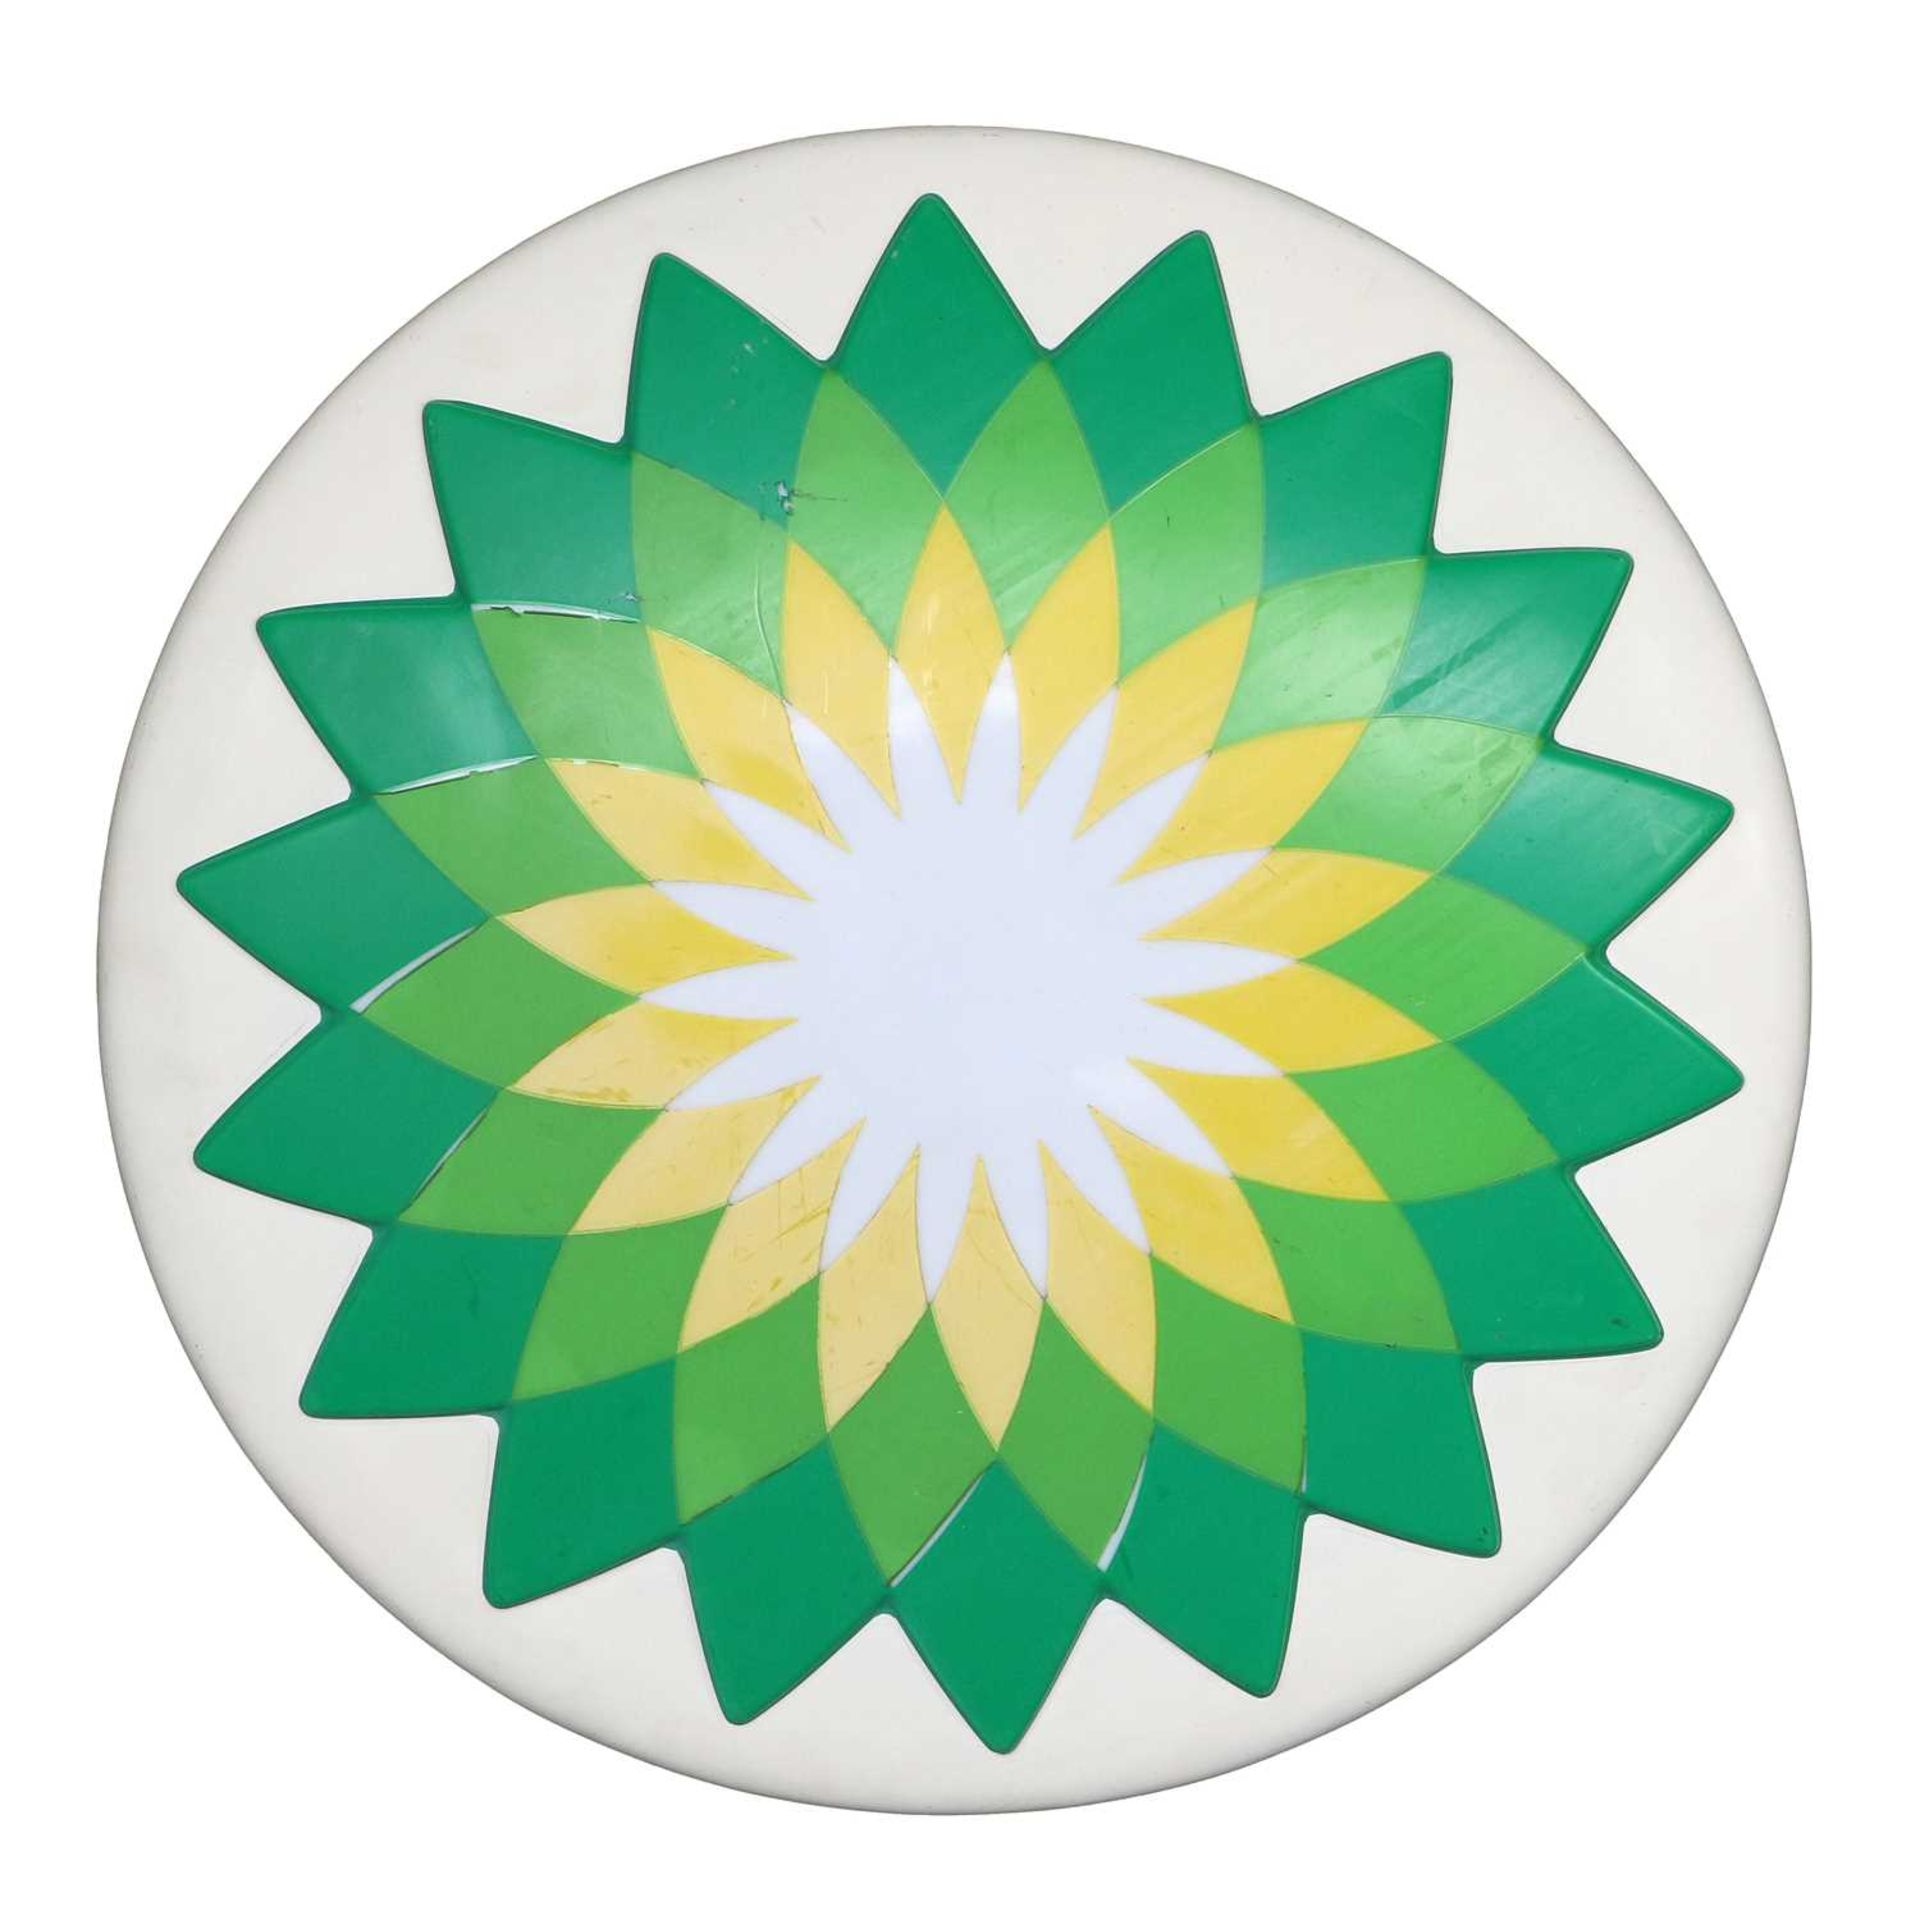 A BP Green, White and Yellow Circular Advertising Sign74cm diameter